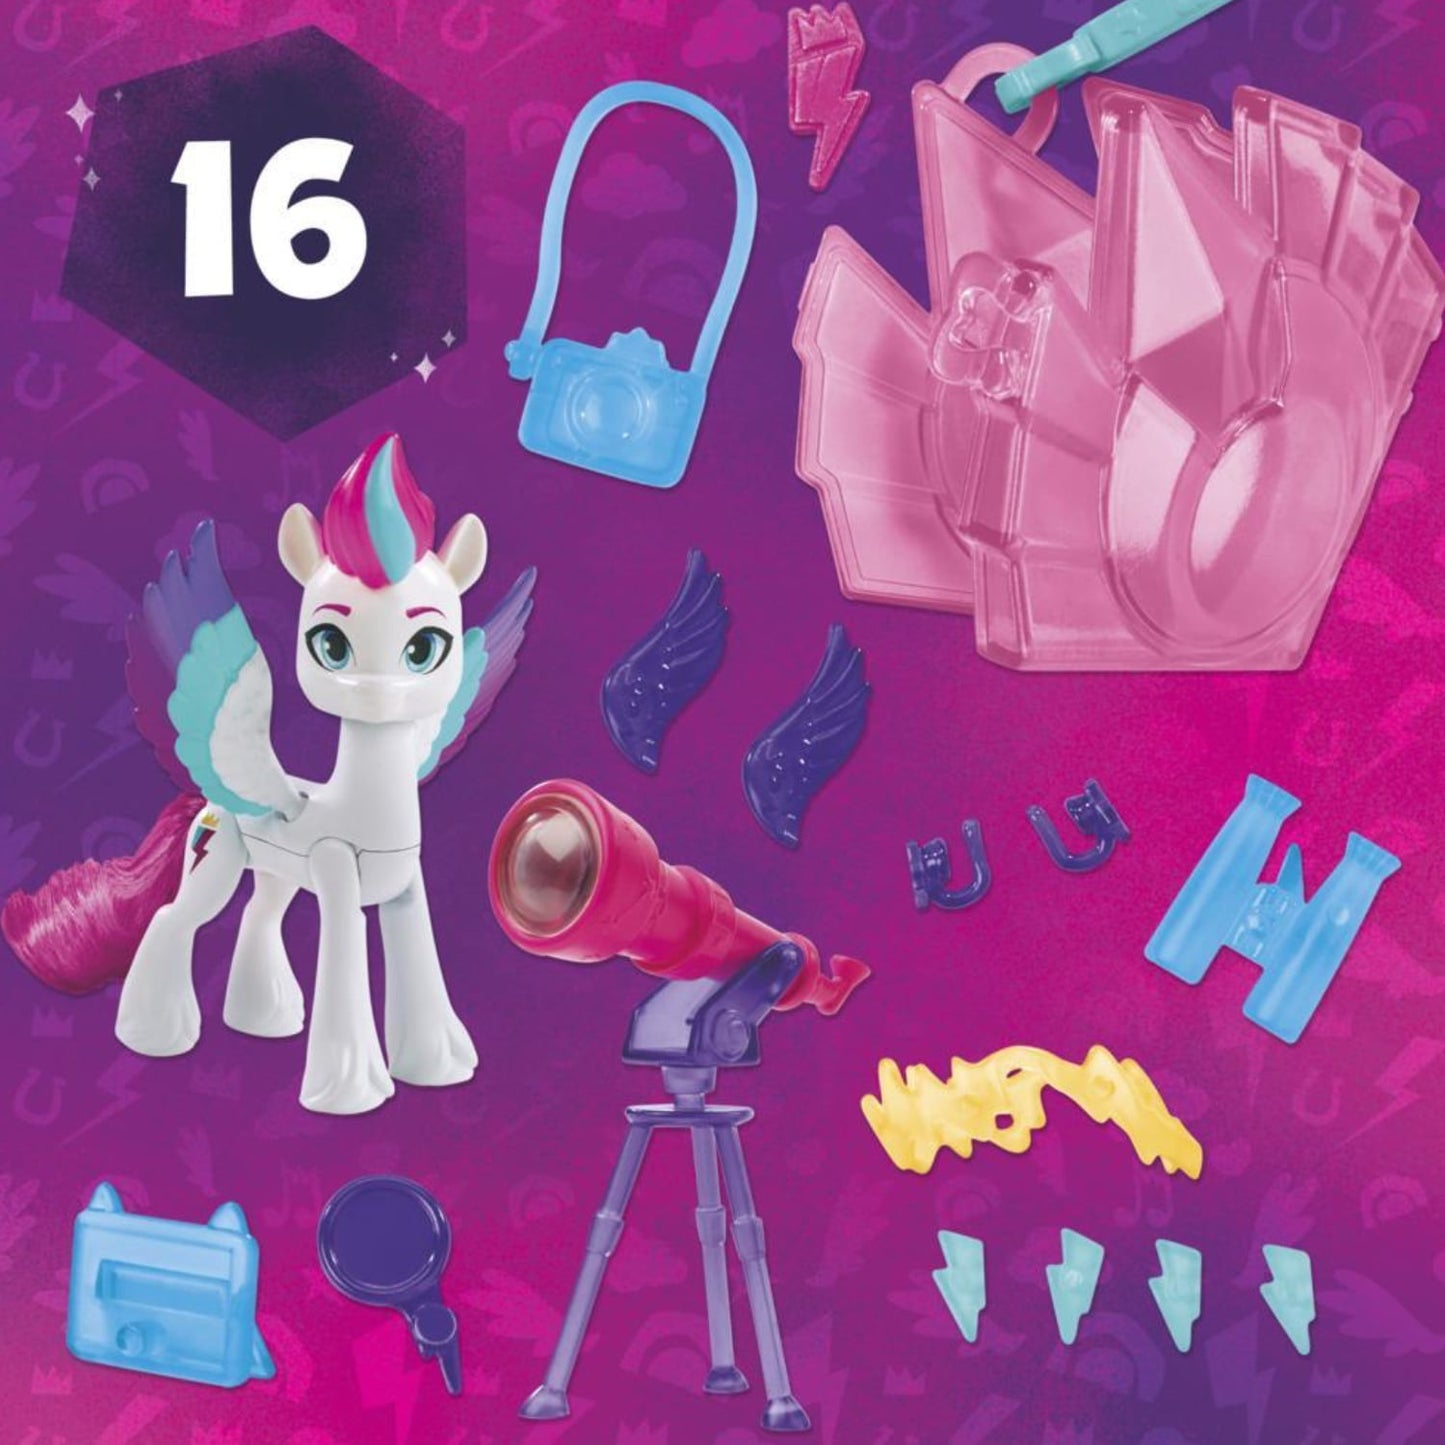 Hasbro My Little Pony: Make Your Mark Toy Cutie Mark Magic Zipp Storm